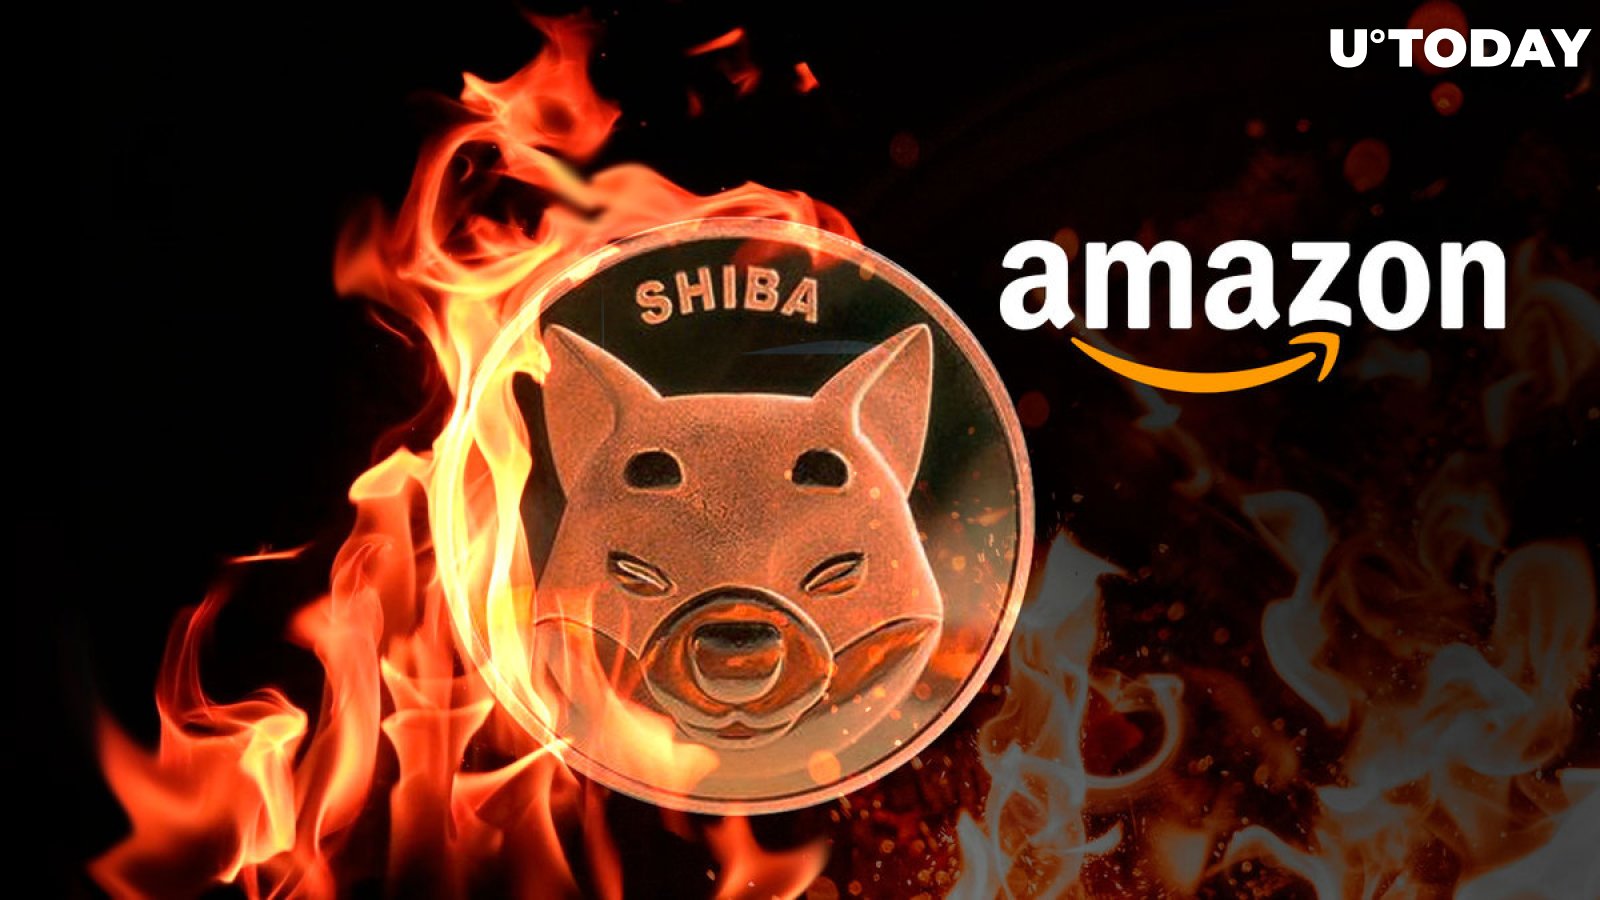 15 Million SHIB Burned via Amazon in August: Details